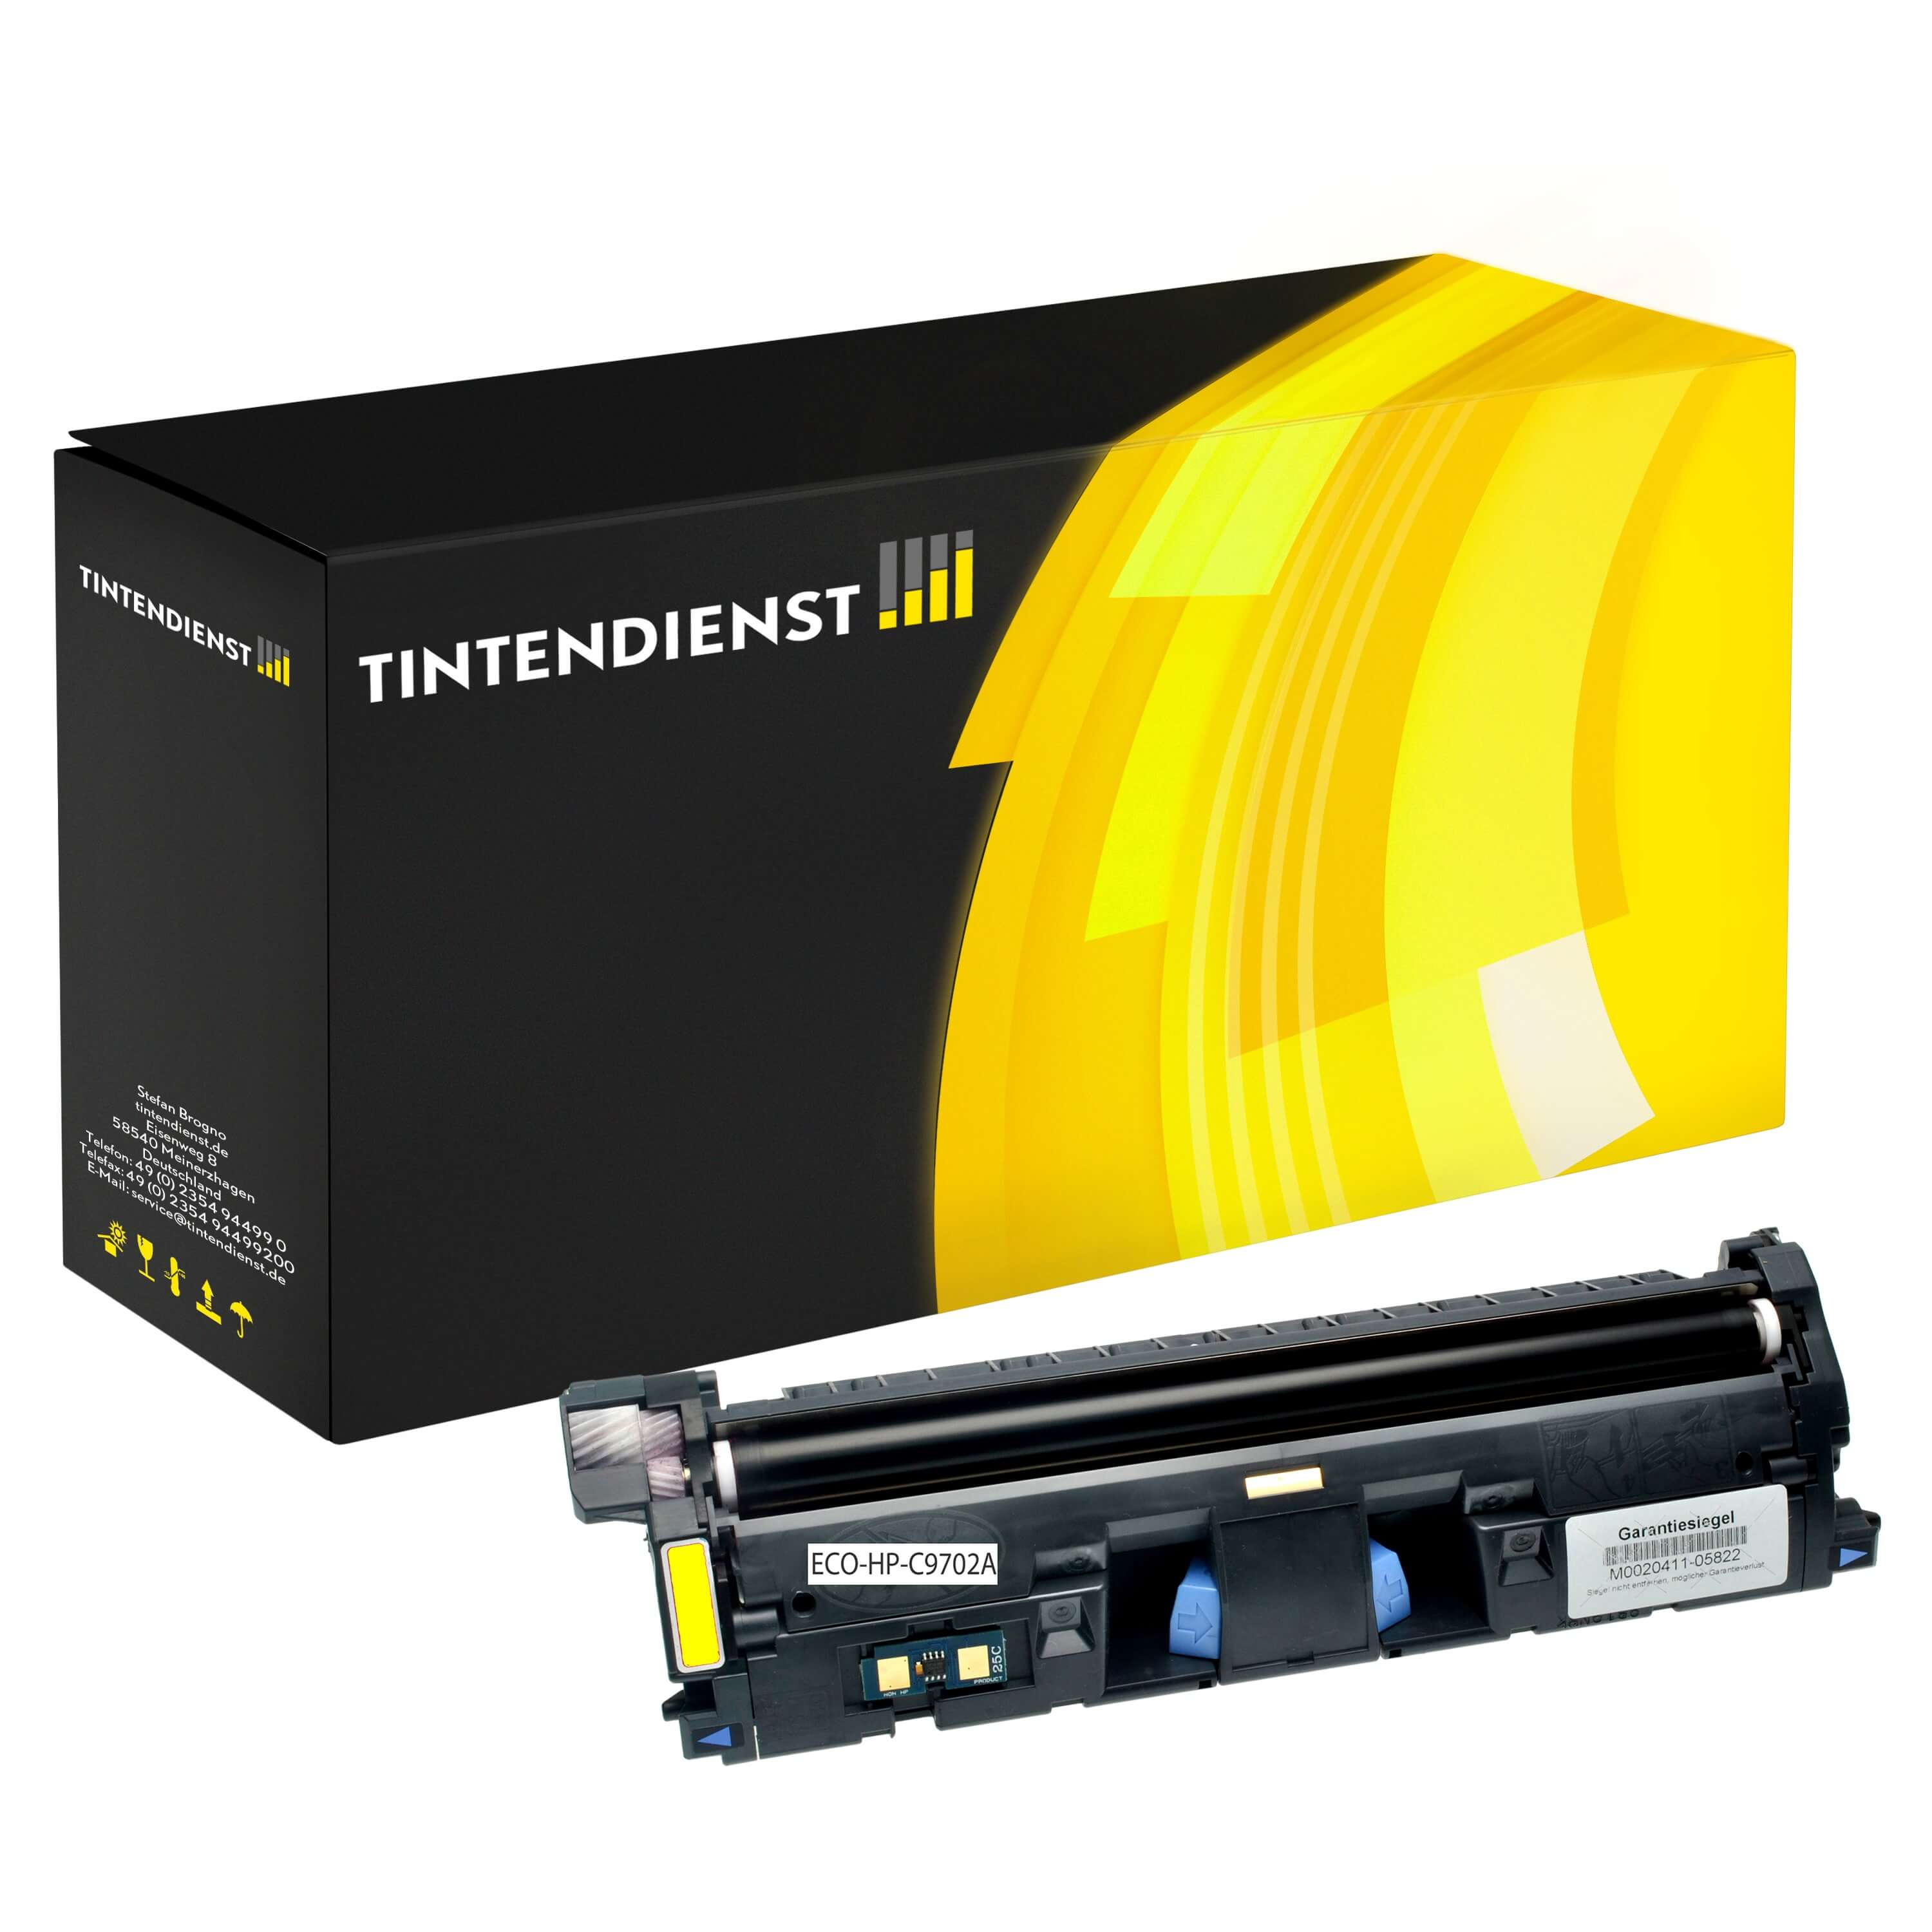 Toner kompatibel für HP Color LaserJet 2500 (C9702A / 121A) Gelb